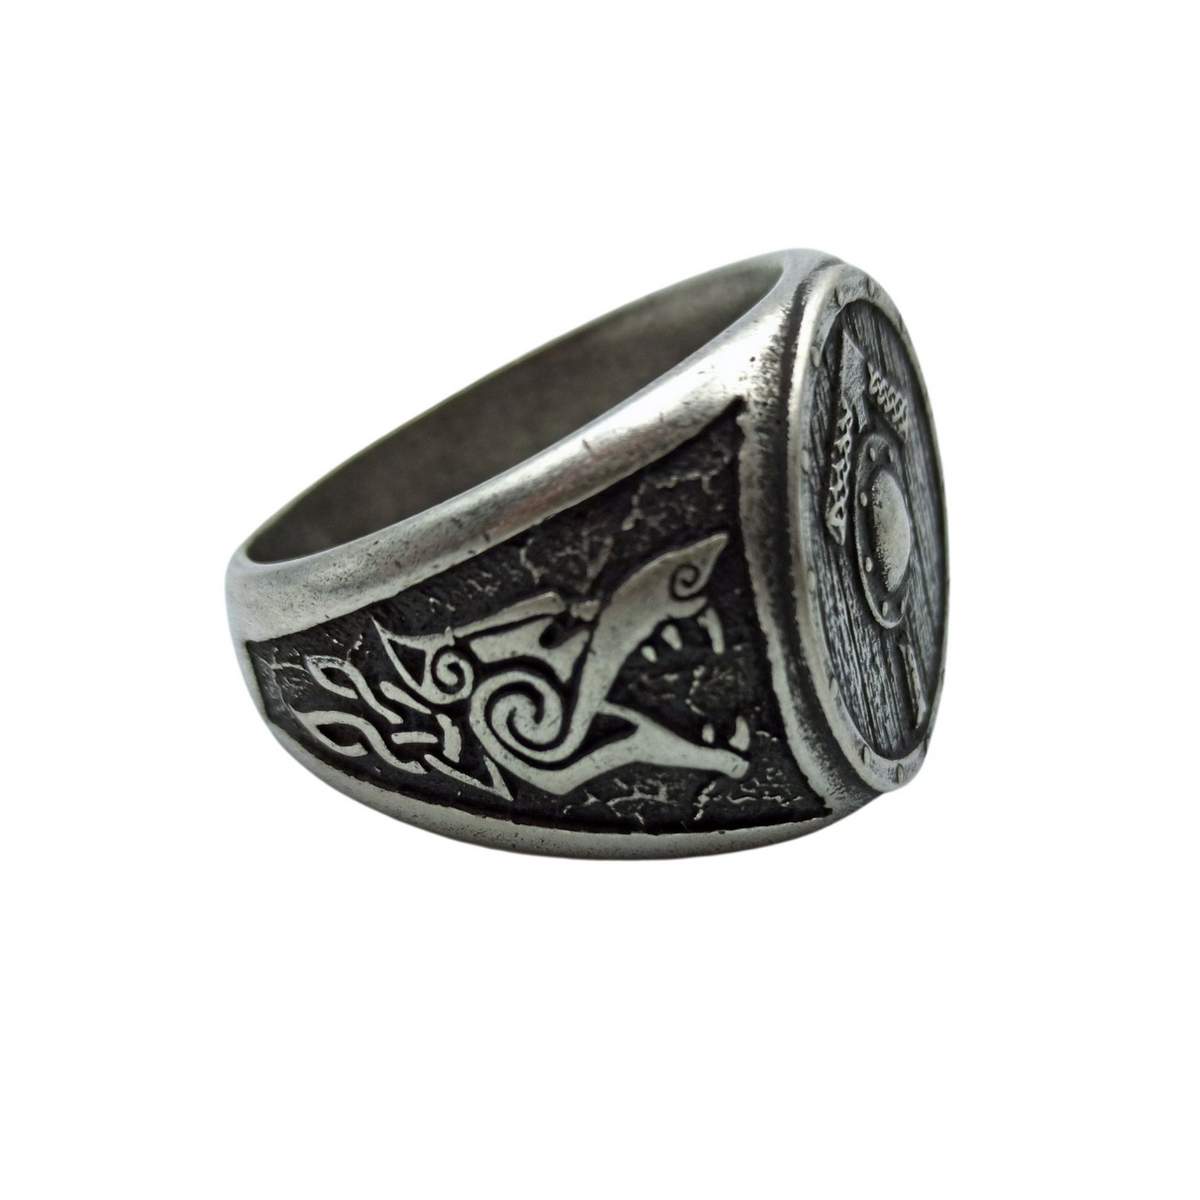 Tiwaz rune shield ring from bronze   